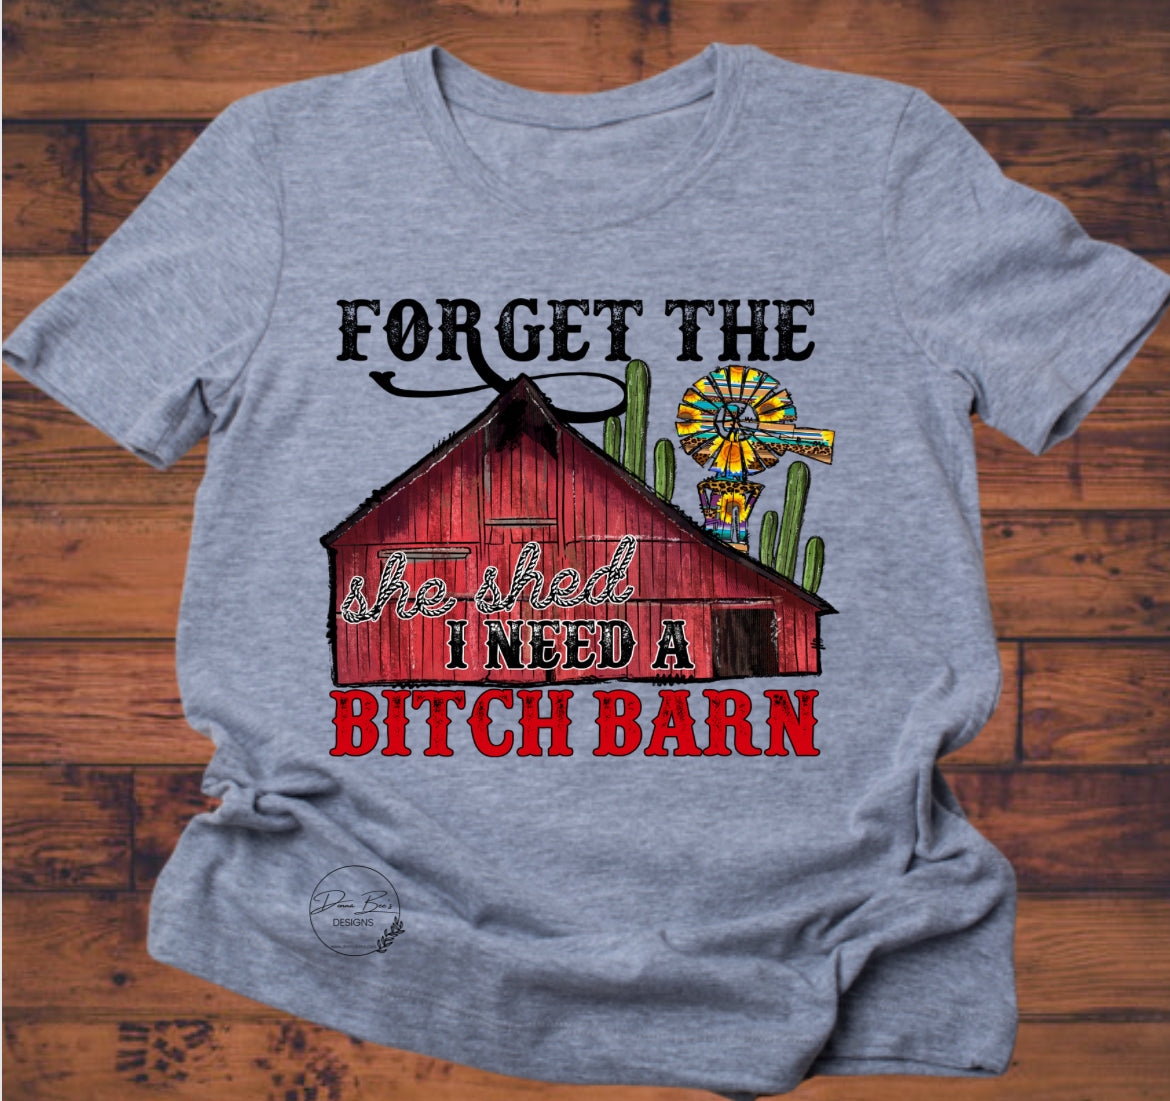 Forget the she shed I need a bitch barn tee